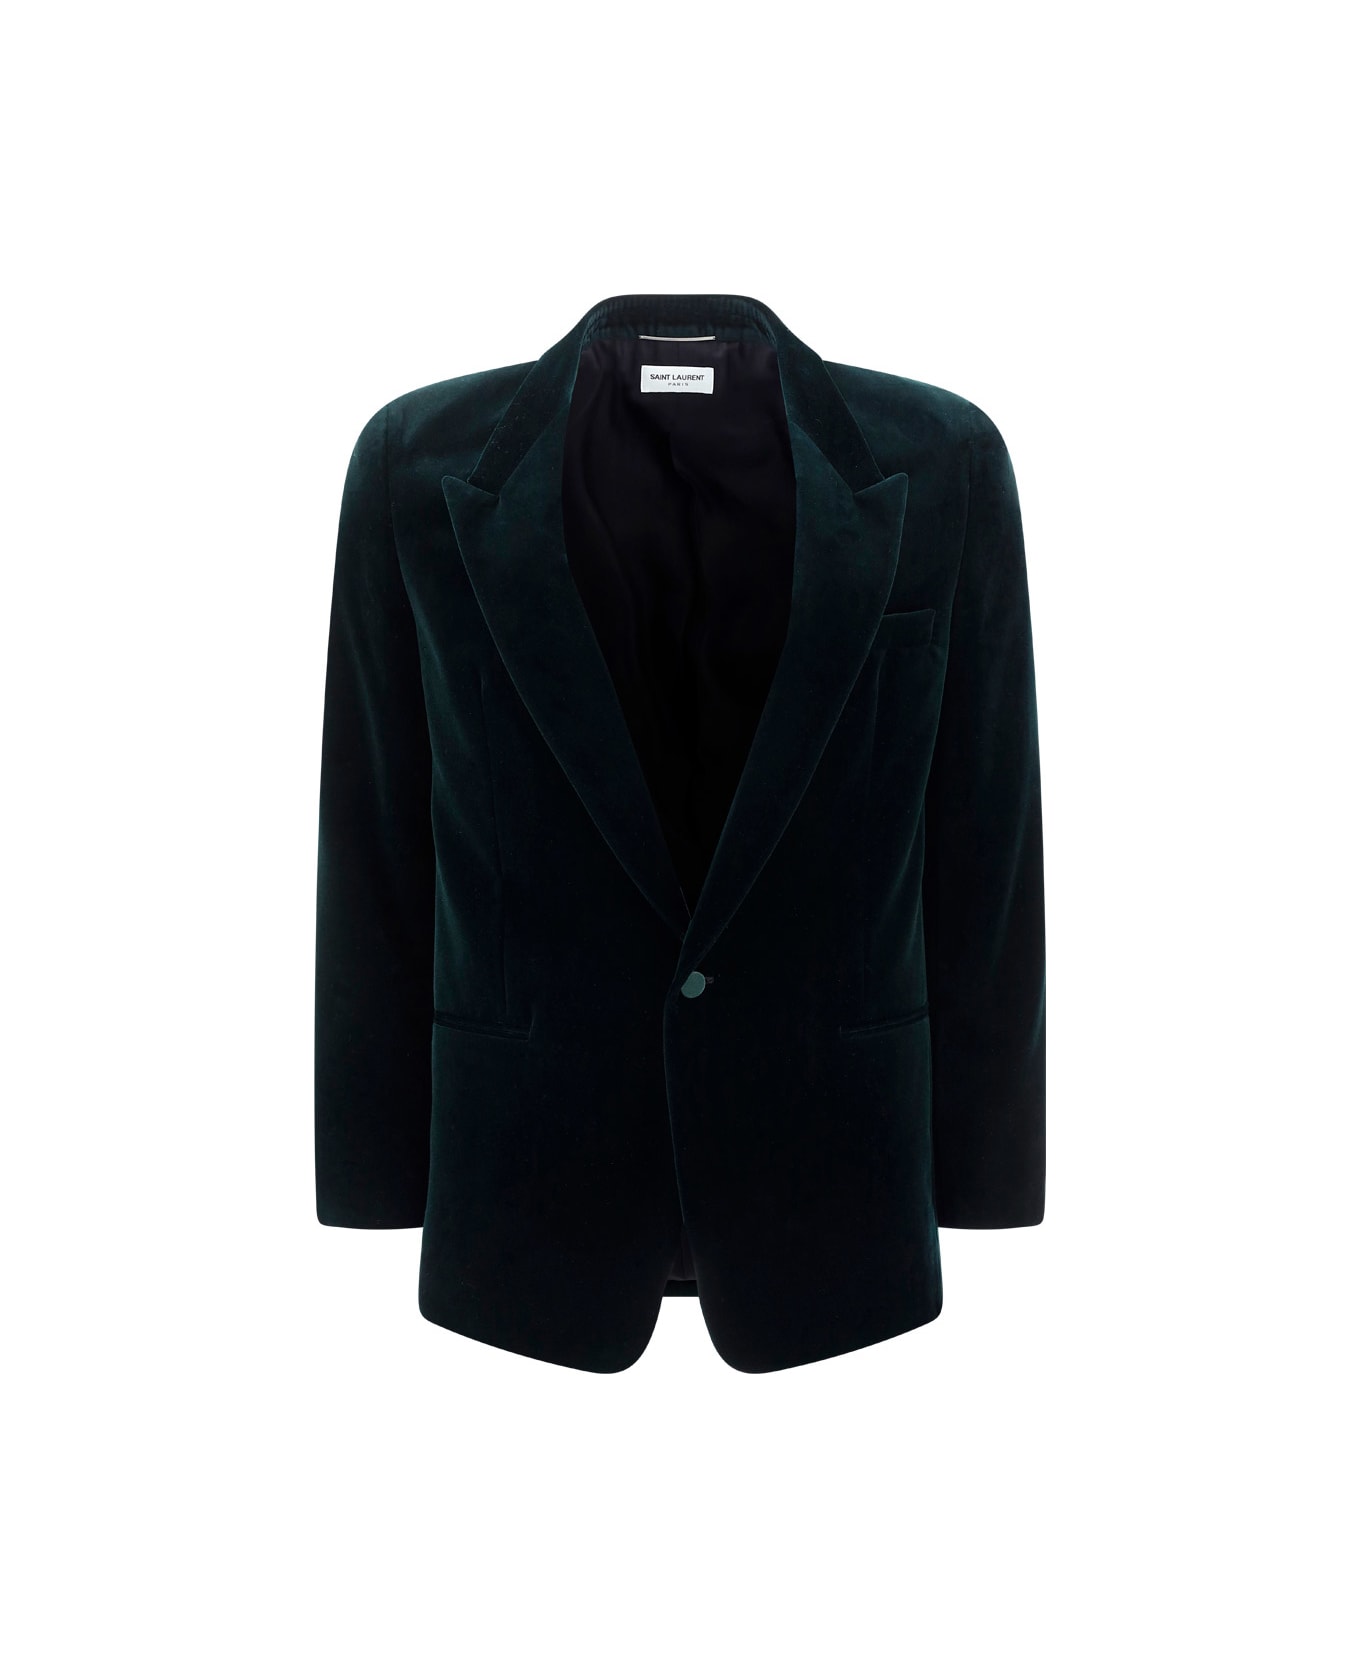 Saint Laurent Blazer Jacket - GREEN